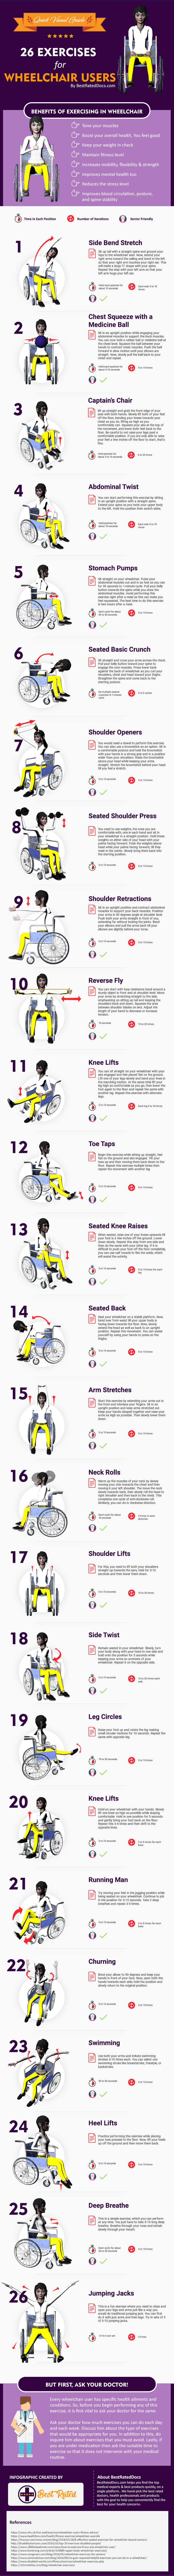 infographic on wheelchair exercises